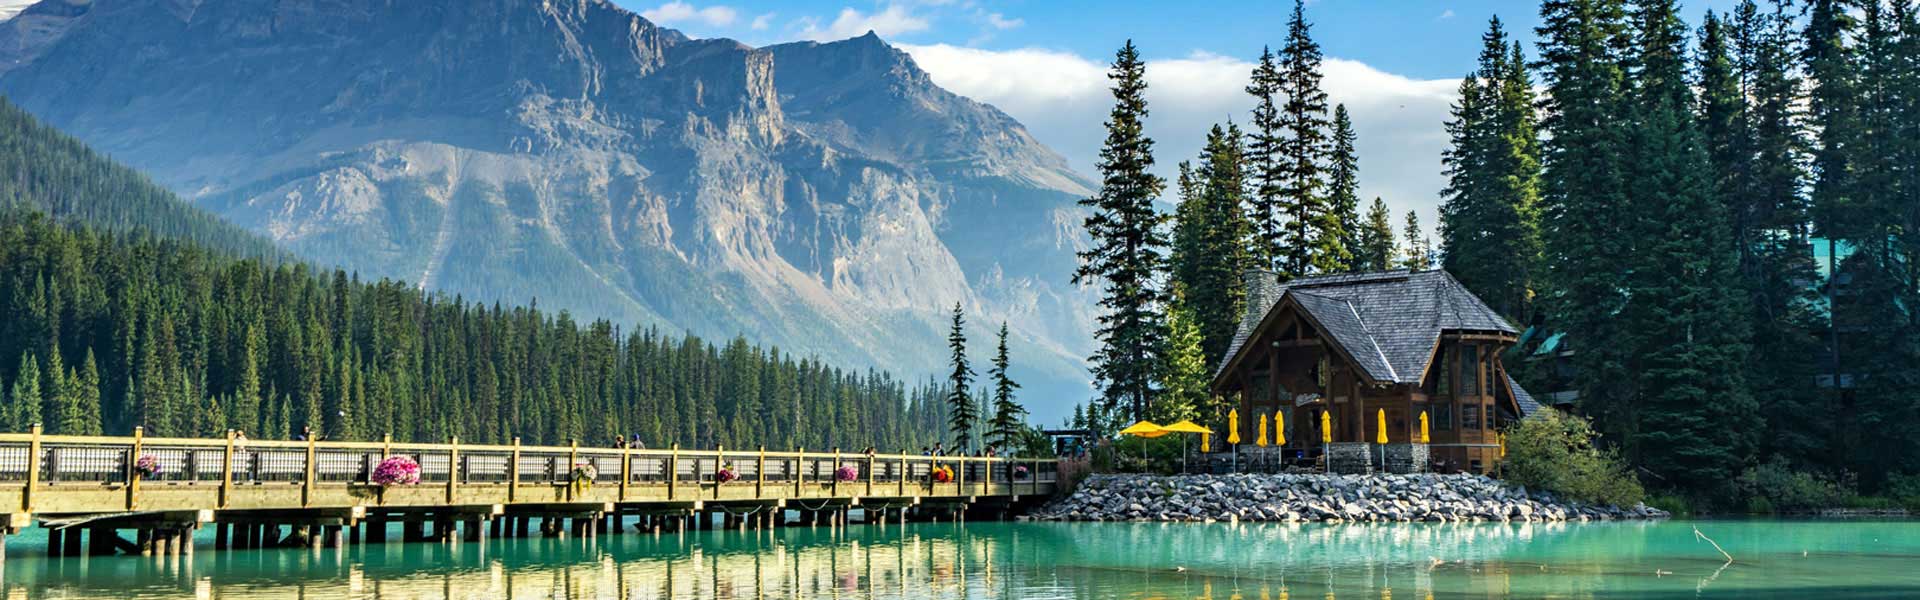 Canada Rail Vacations